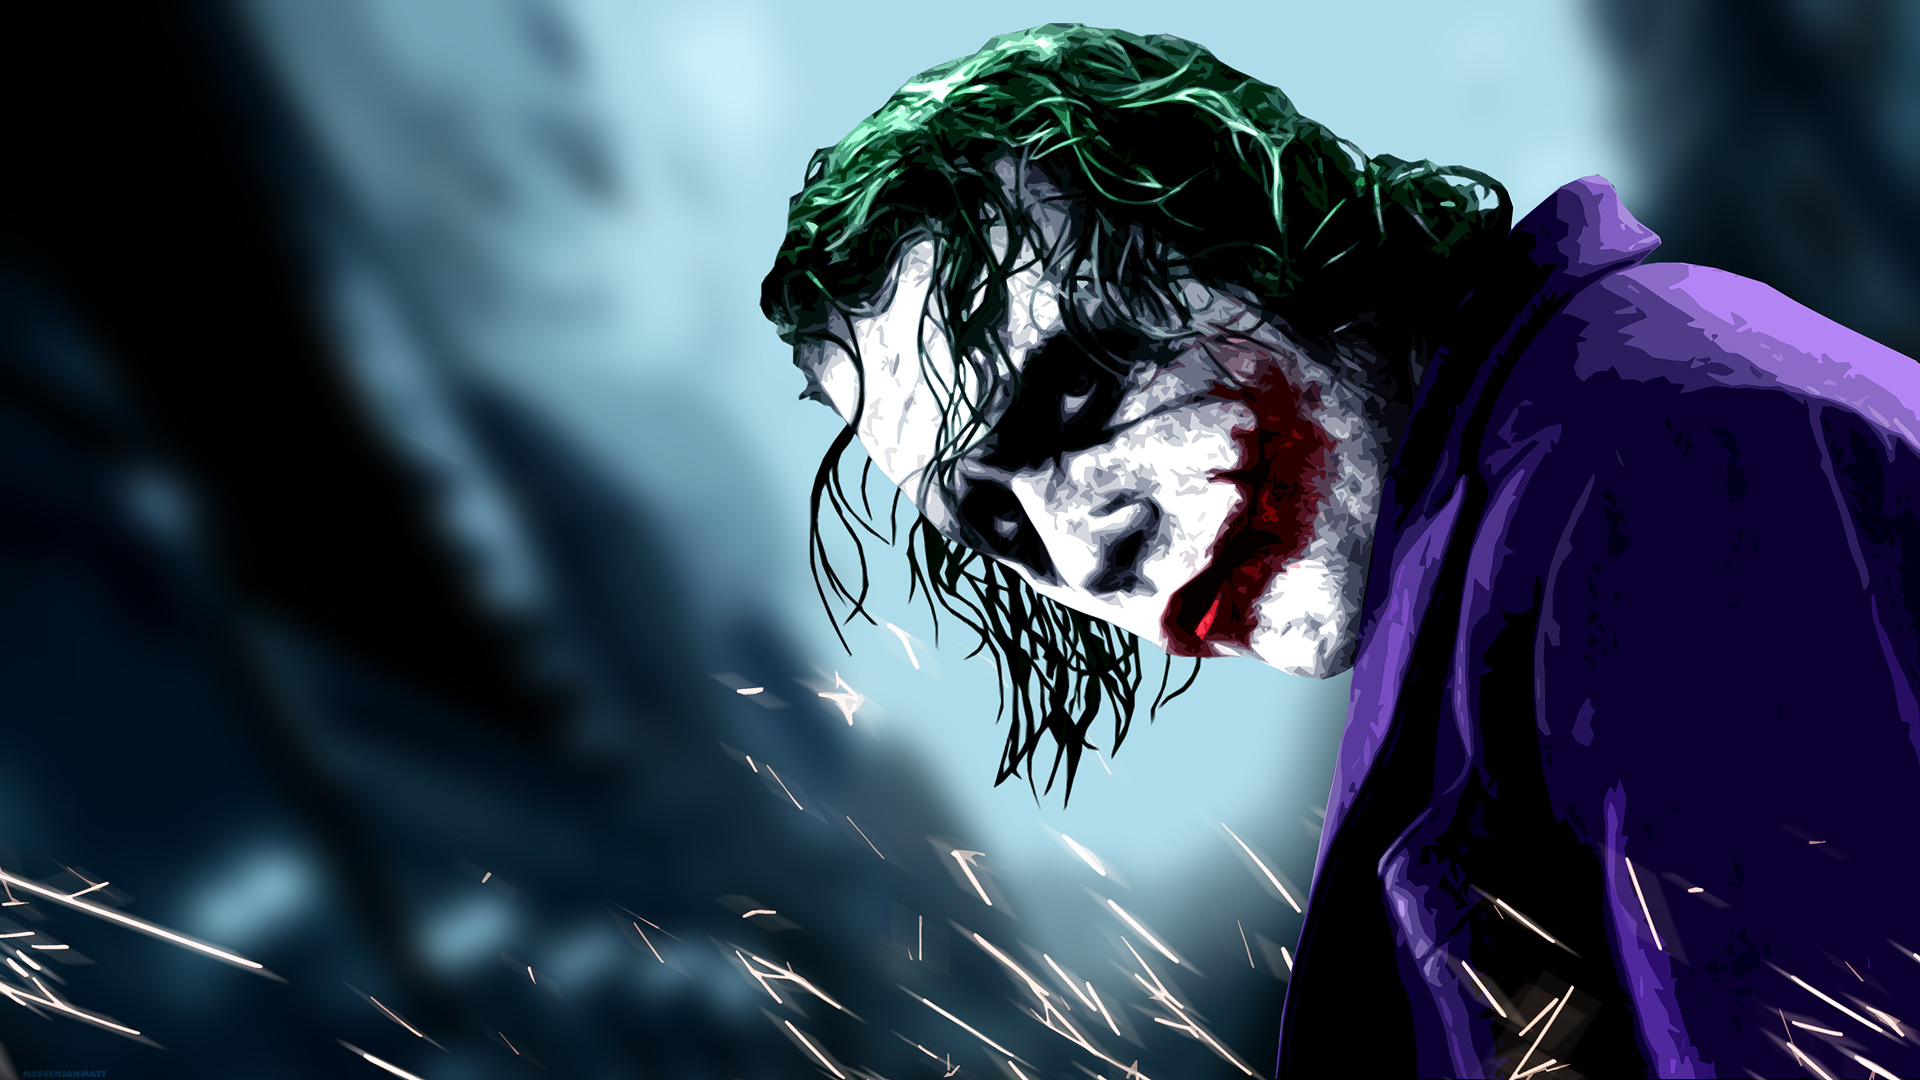 Joker wallpaper hd